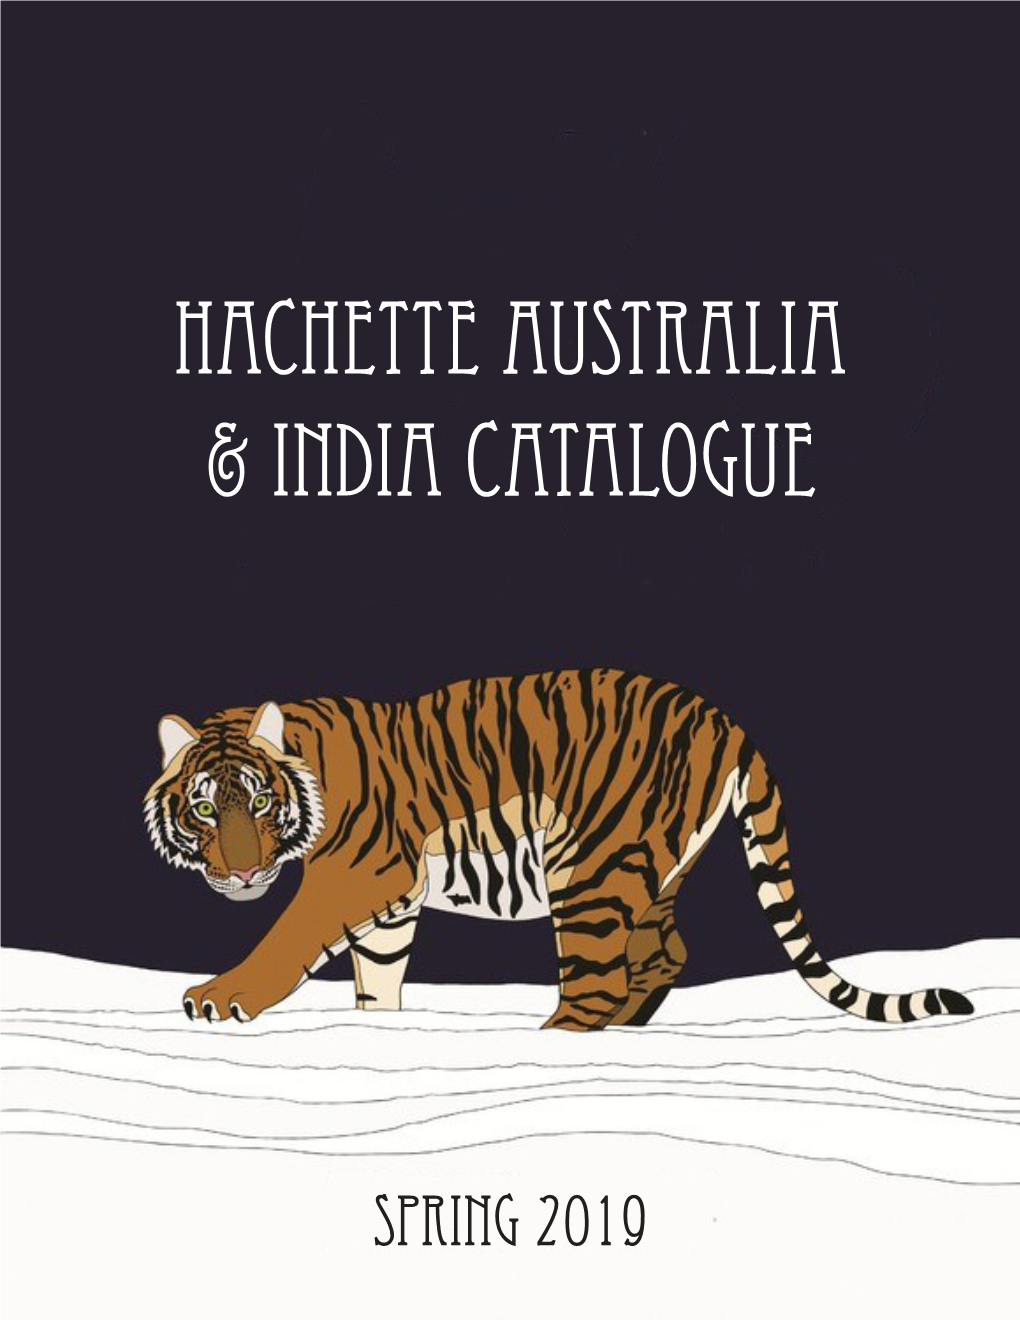 Hachette Australia & India Catalogue